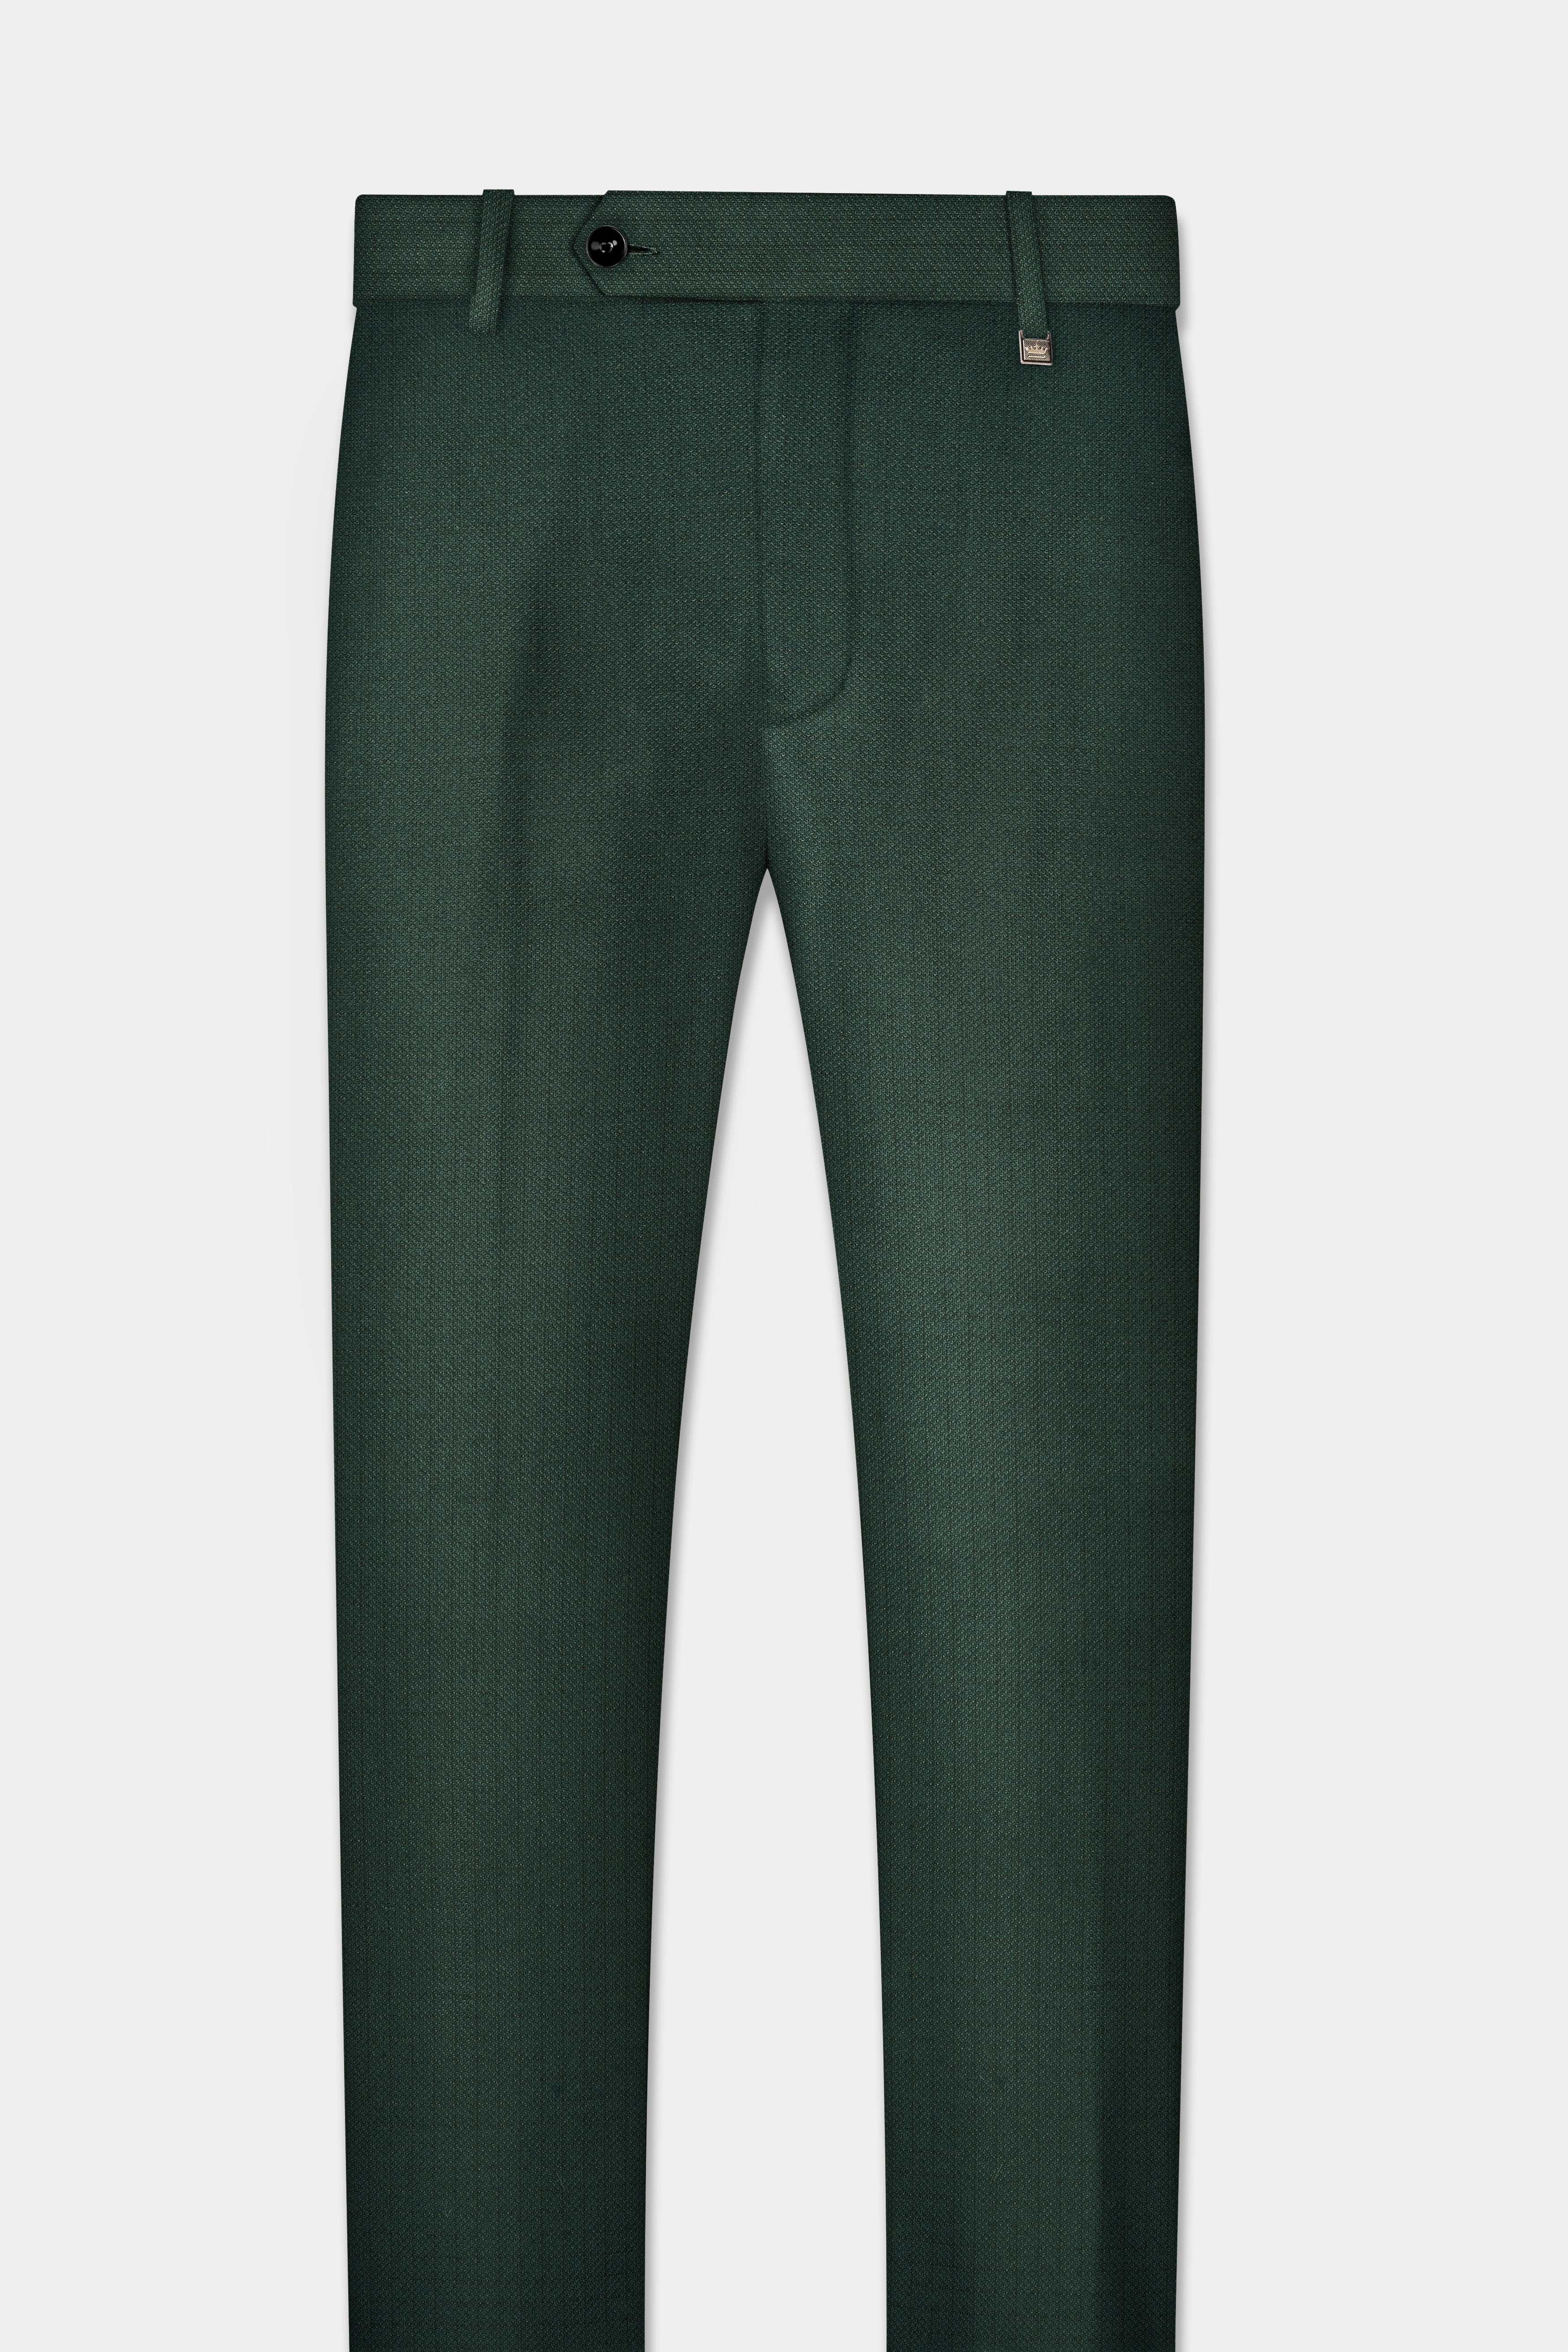 Everglade Green Plain Solid Wool Blend Pant